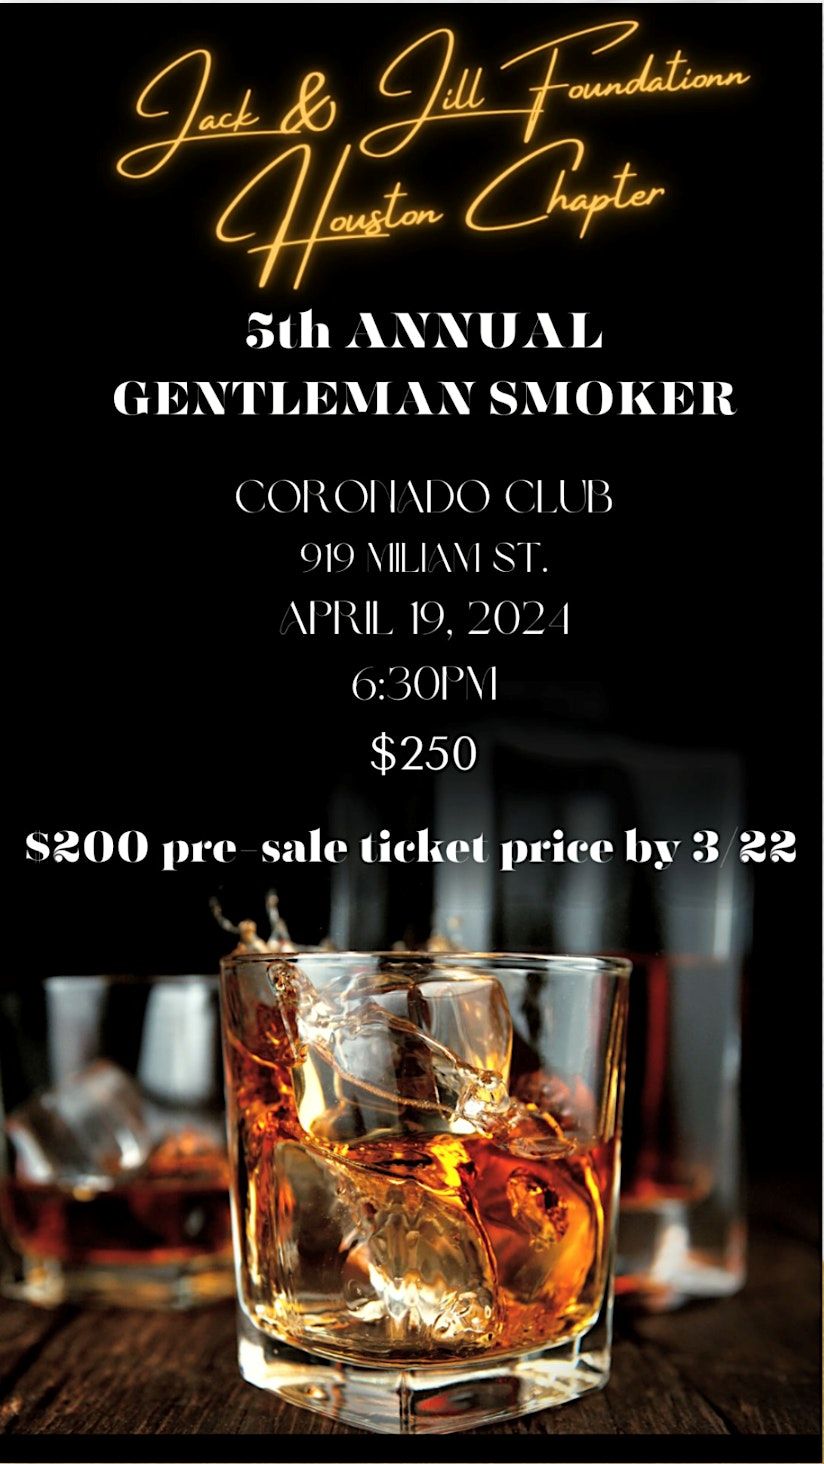 5th Annual Gentleman's Smoker